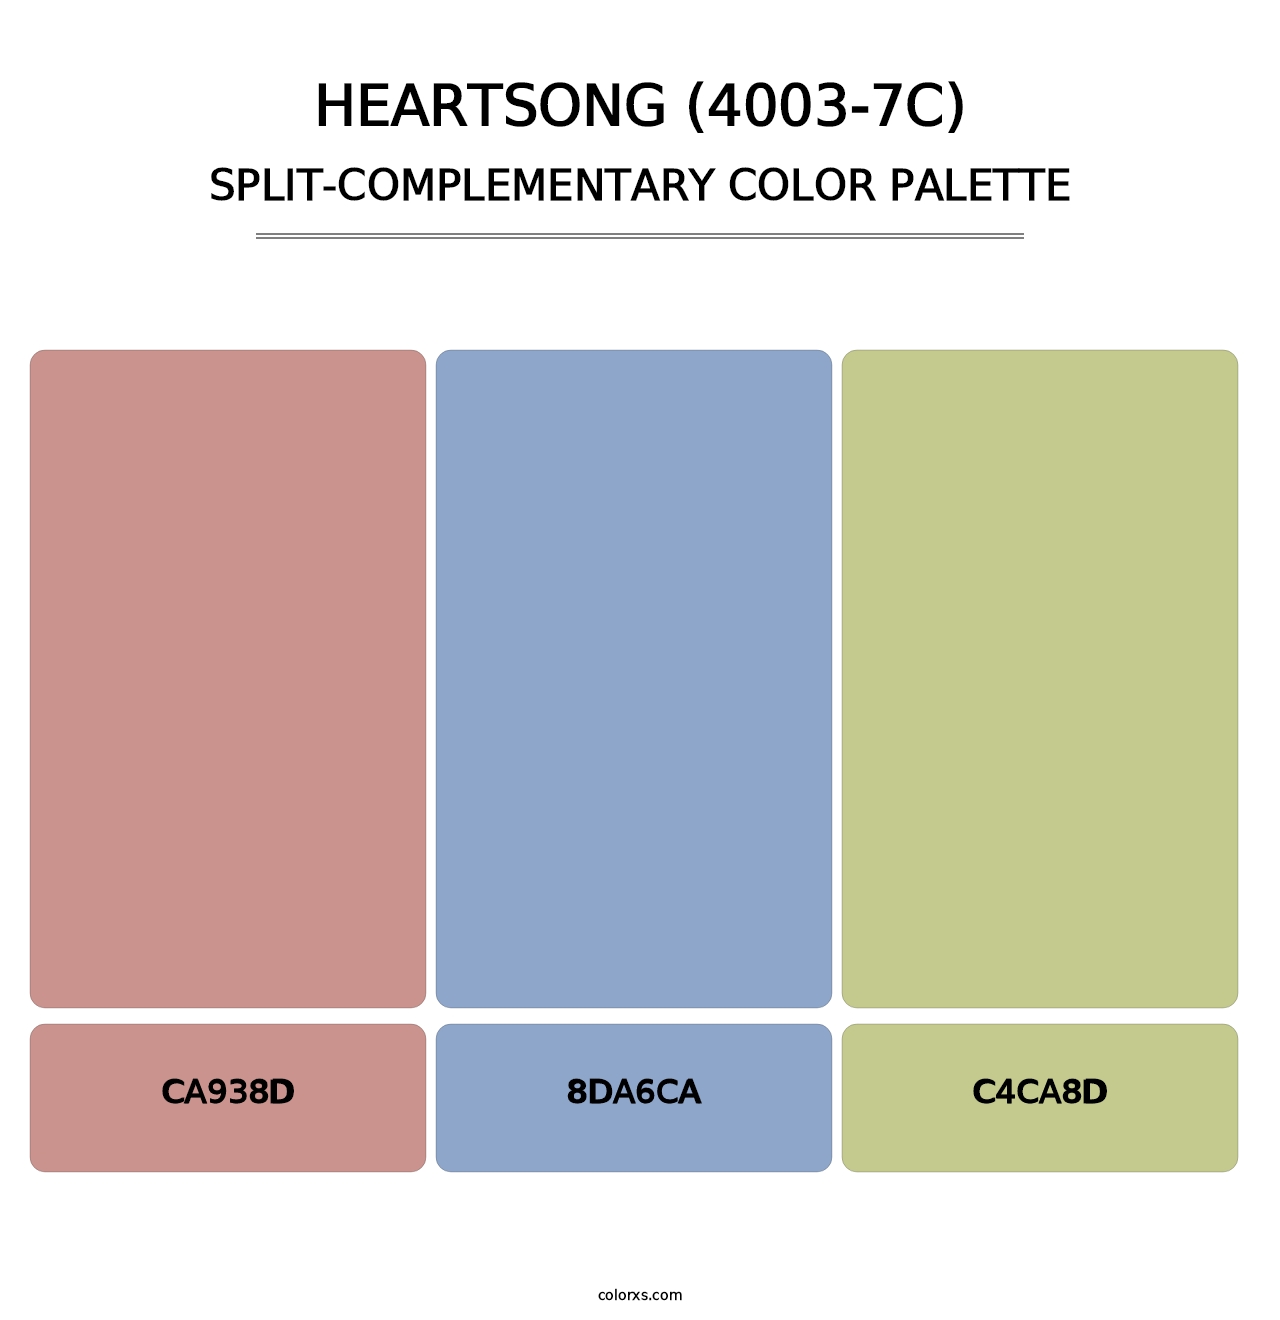 Heartsong (4003-7C) - Split-Complementary Color Palette